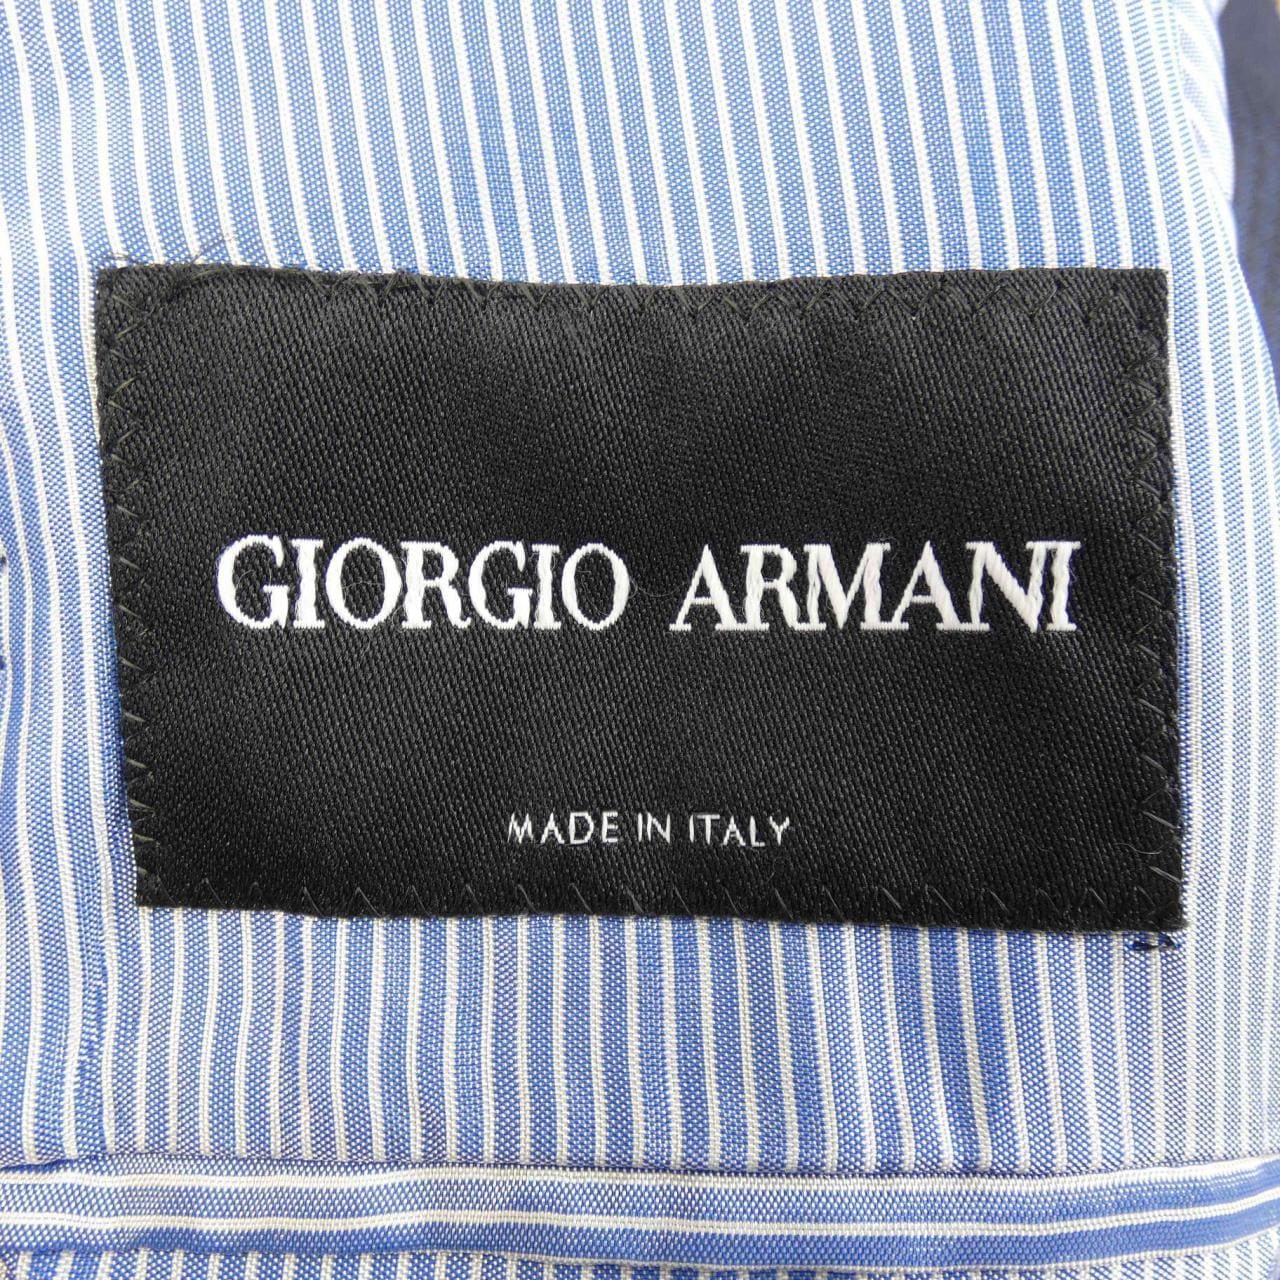 Giorgio Armani GIORGIO ARMANI suit